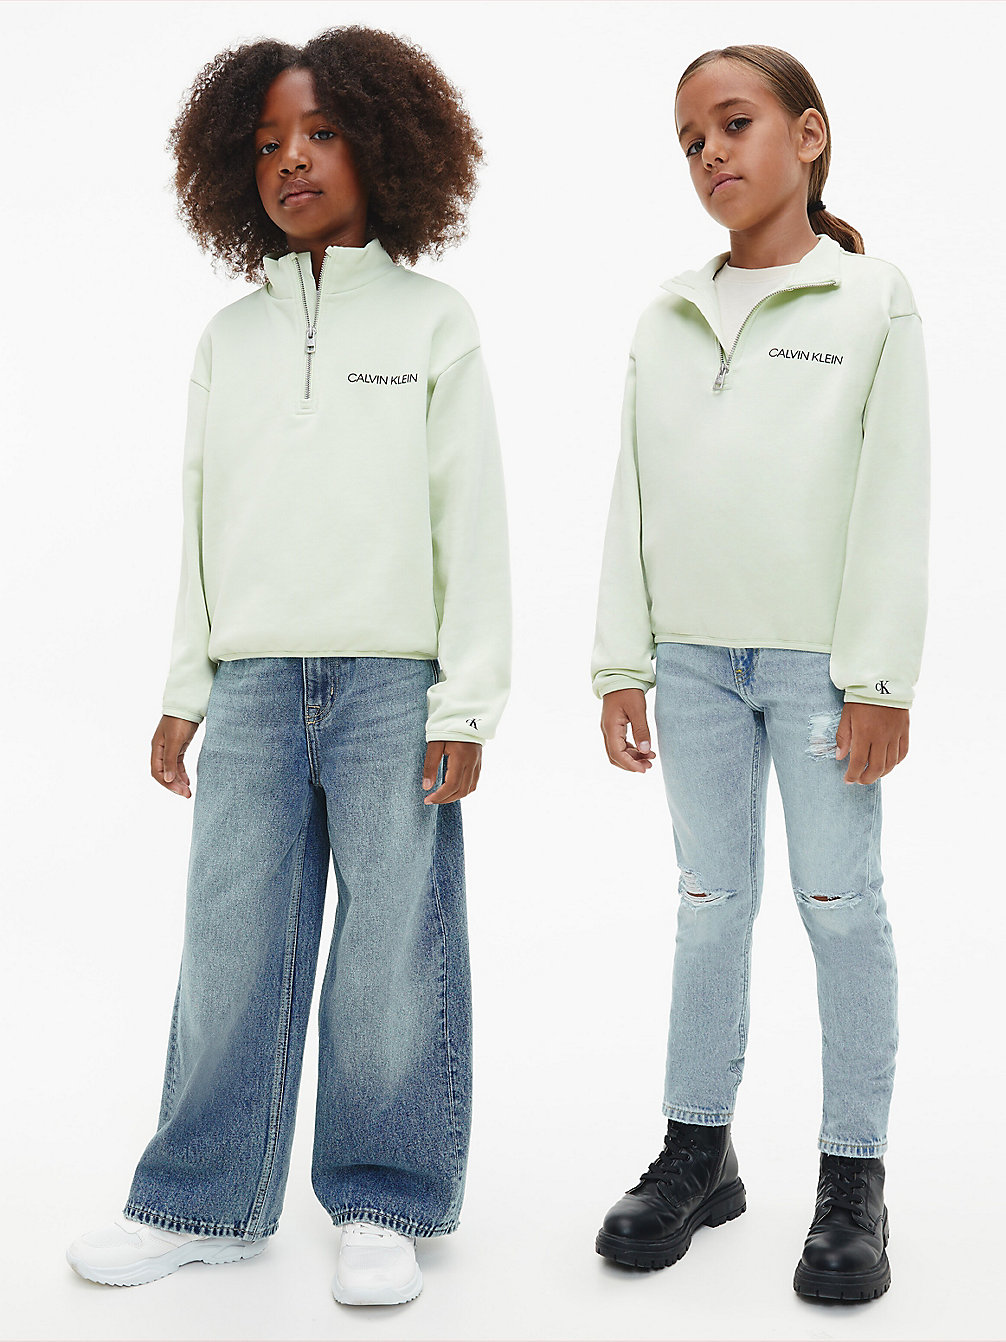 SEAFOAM GREEN > Свободный свитшот с воротником на молнии унисекс > undefined kids unisex - Calvin Klein